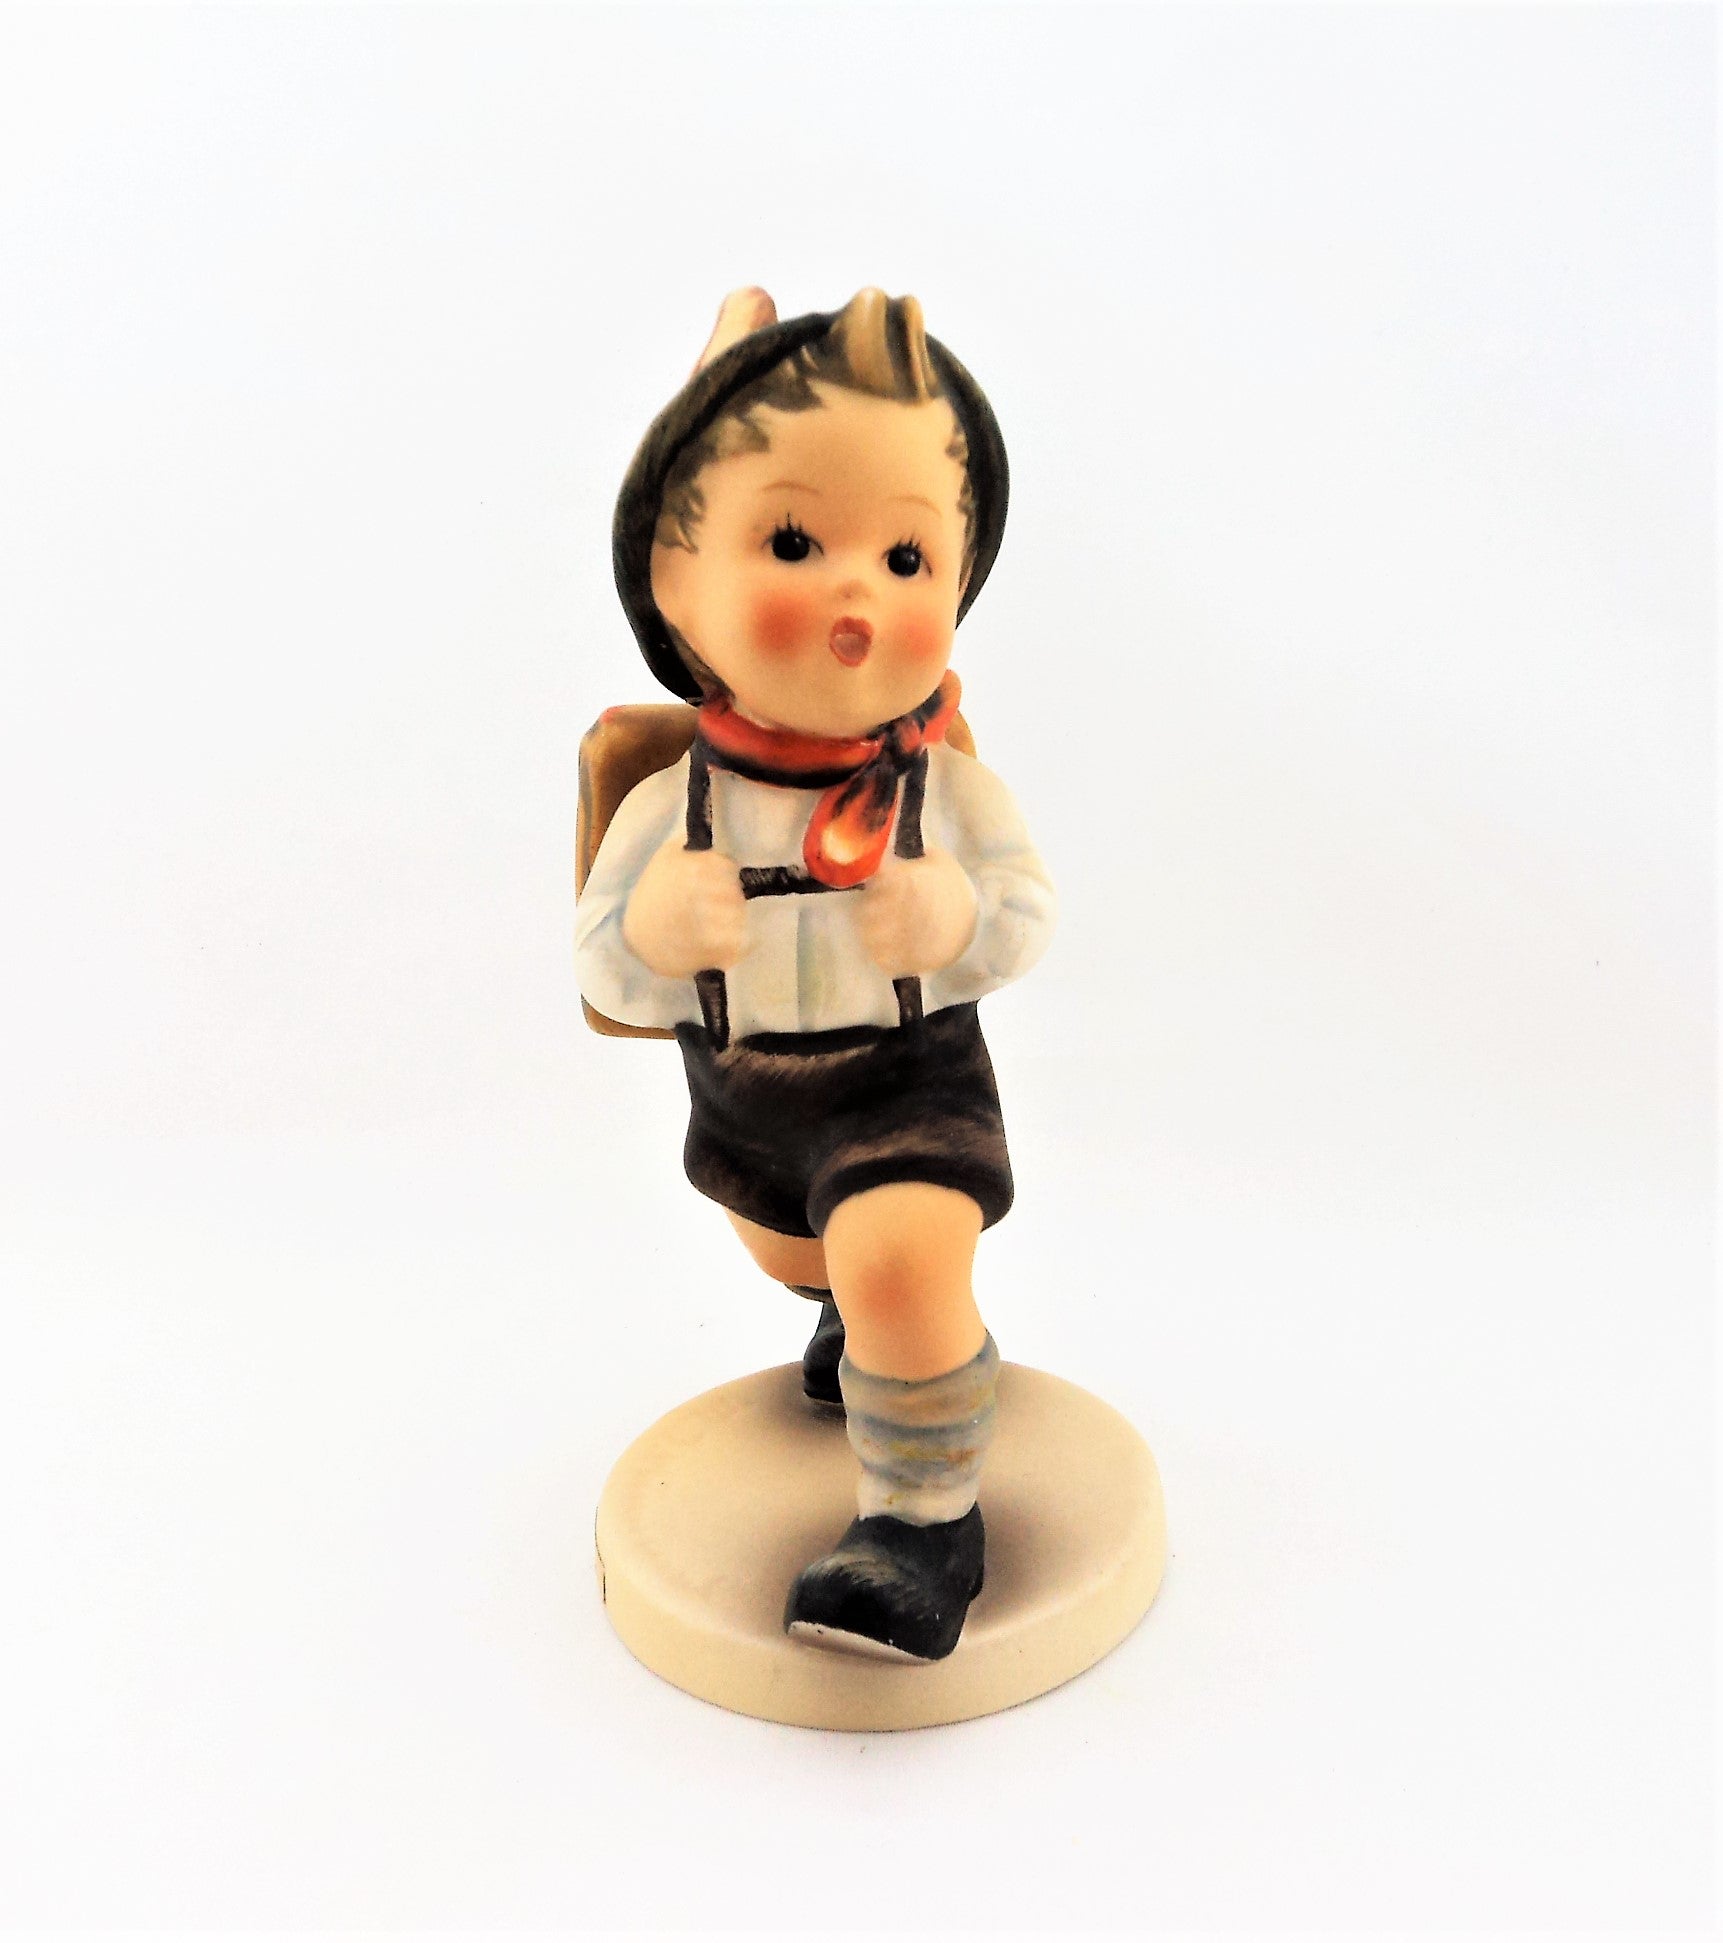 Vintage Hummel School Boy Figurine